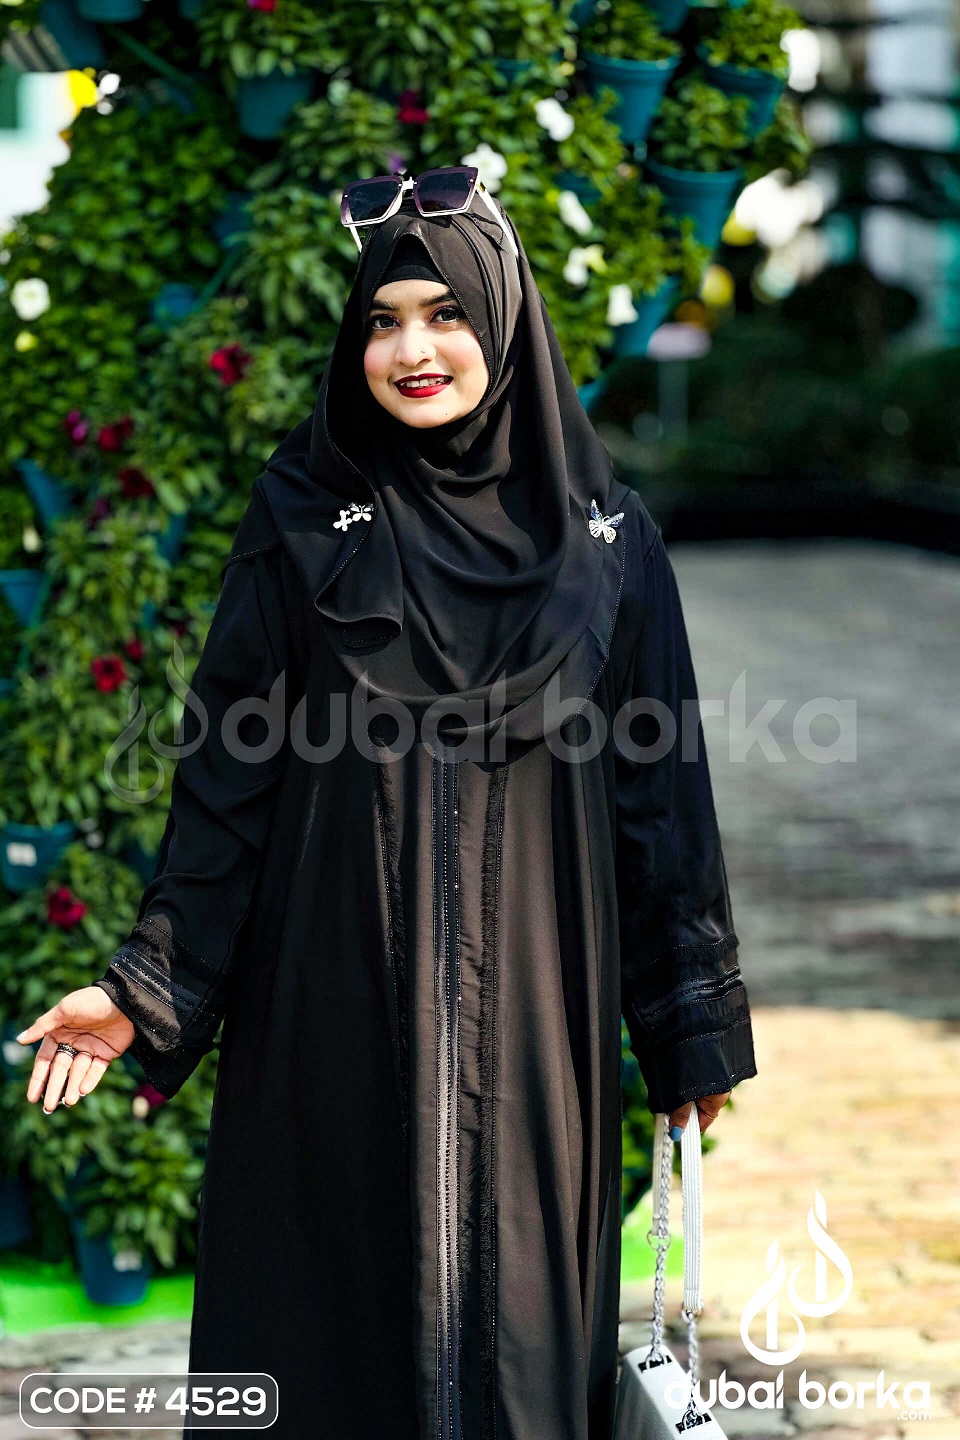 Fida Borka with Hijab